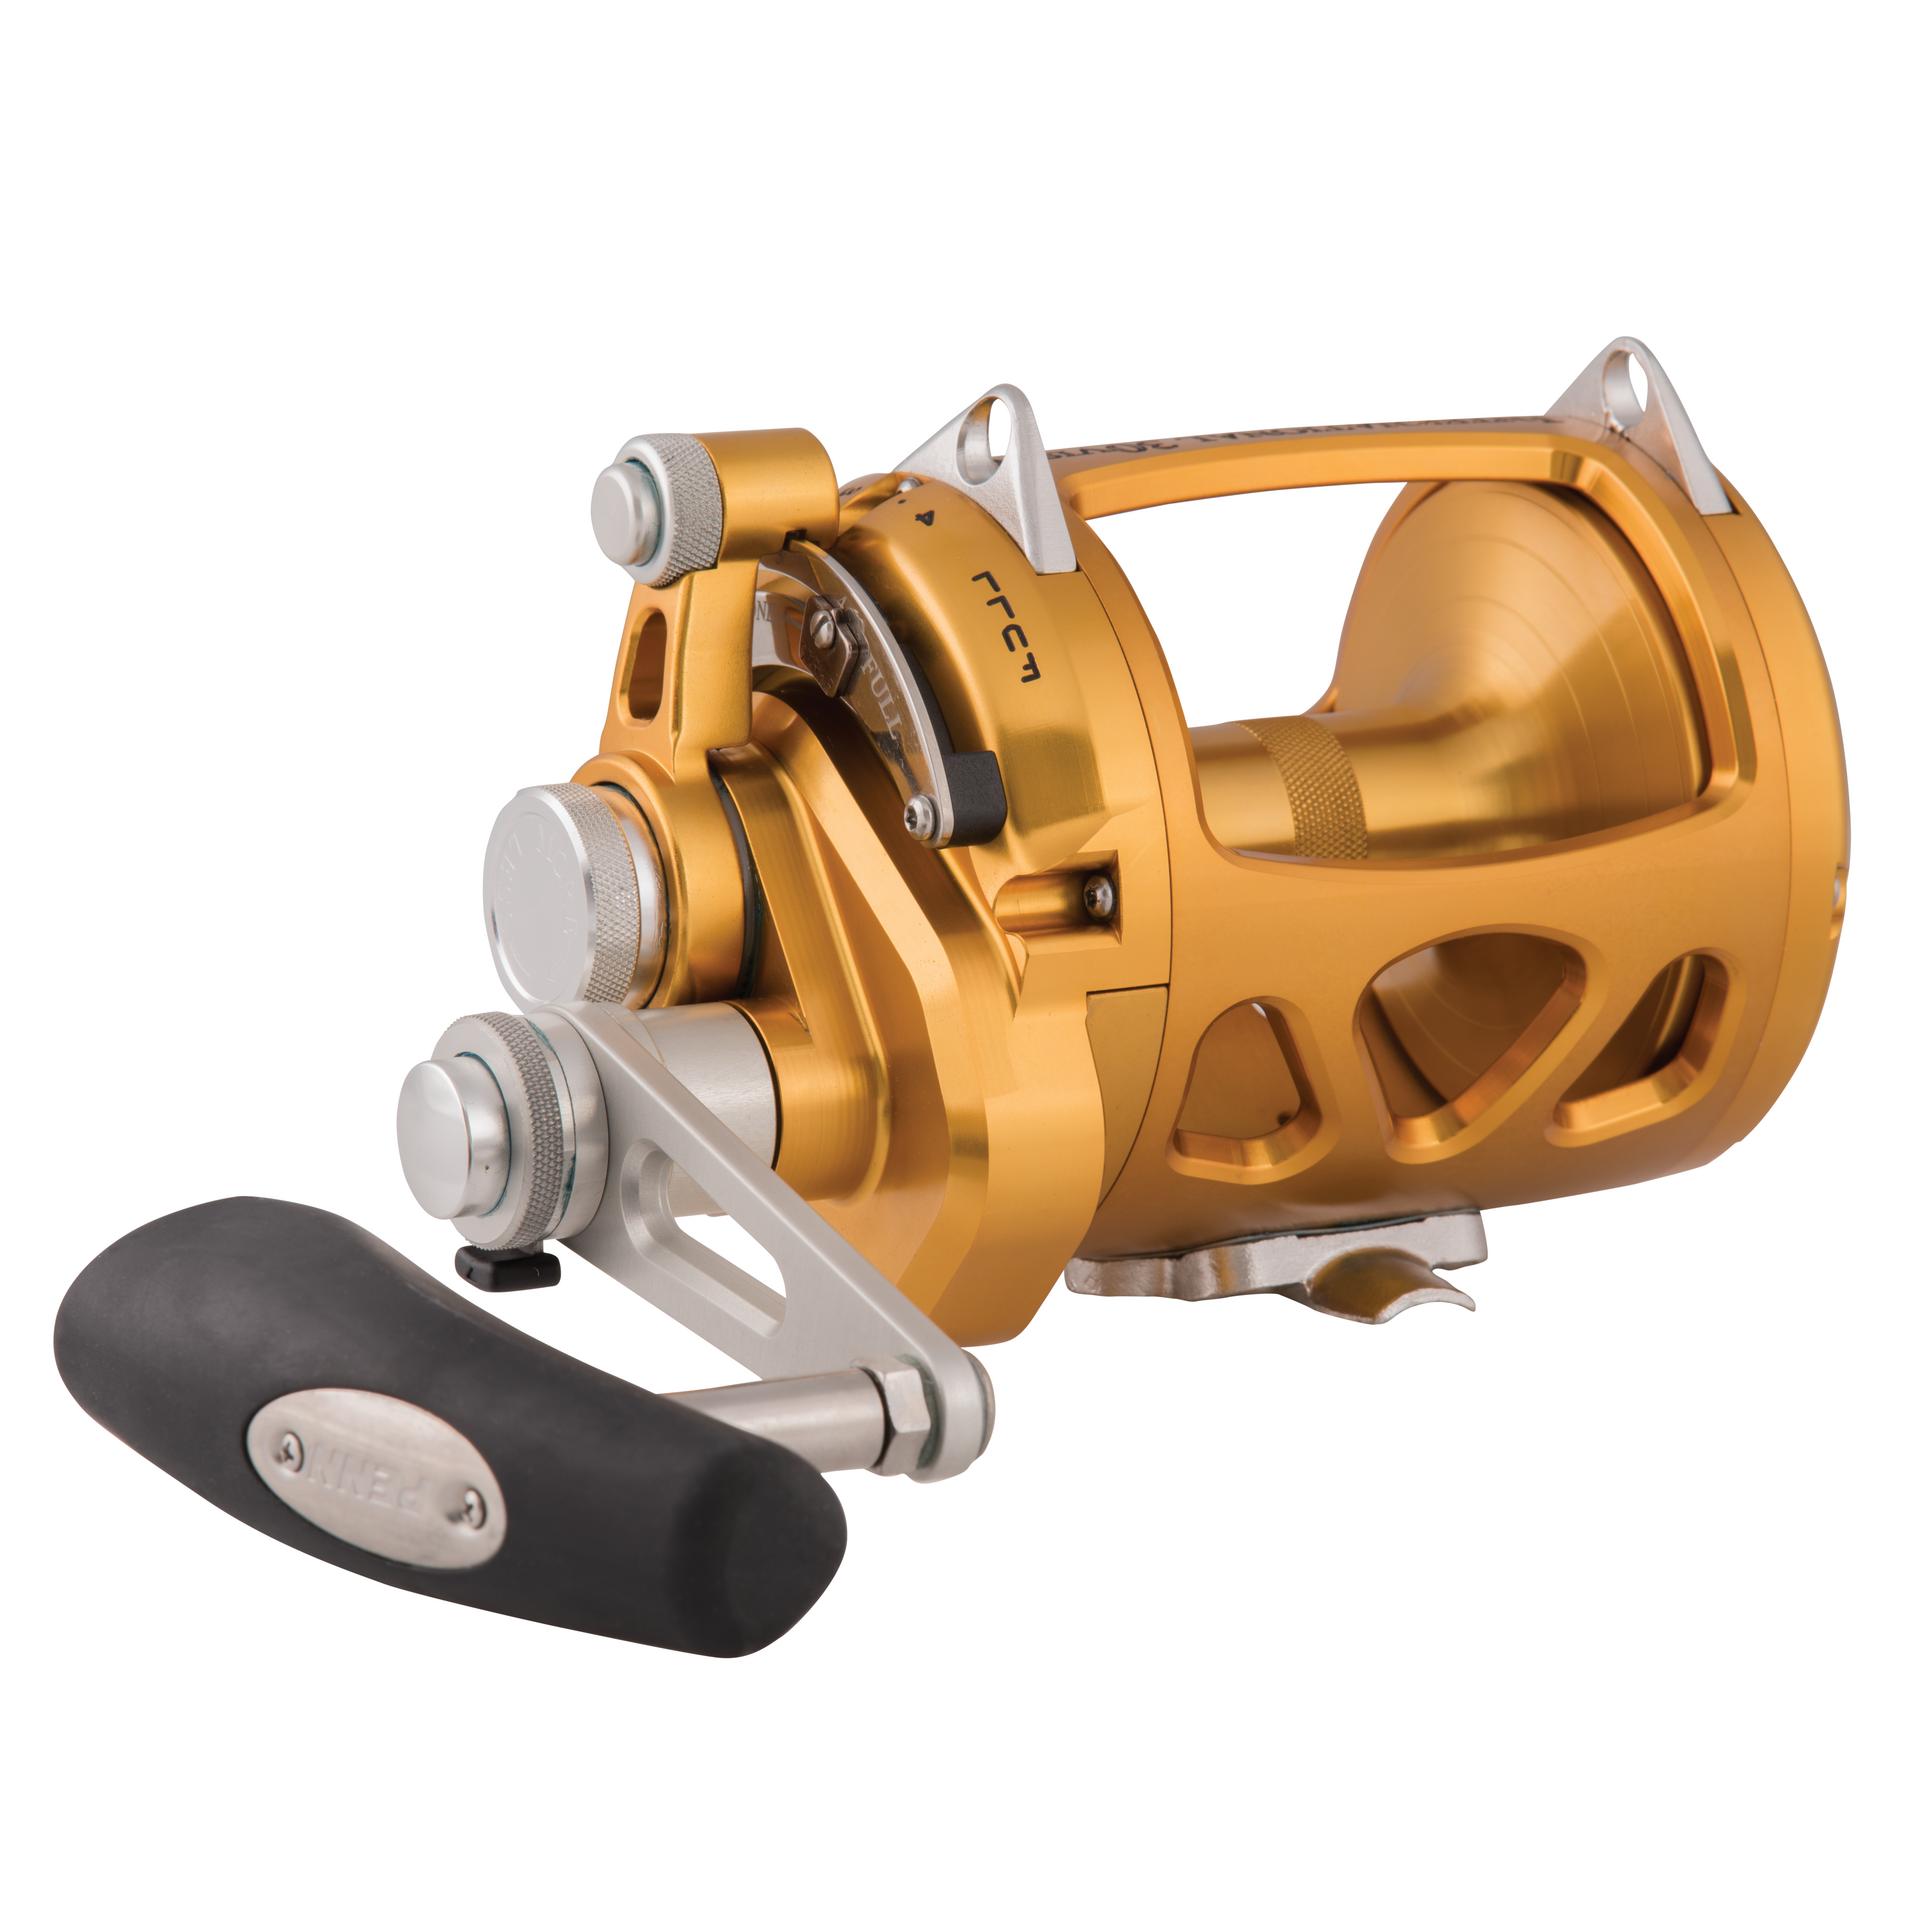 Penn International VI Detachable Electric Reel | Penn Fishing 80 / Gold